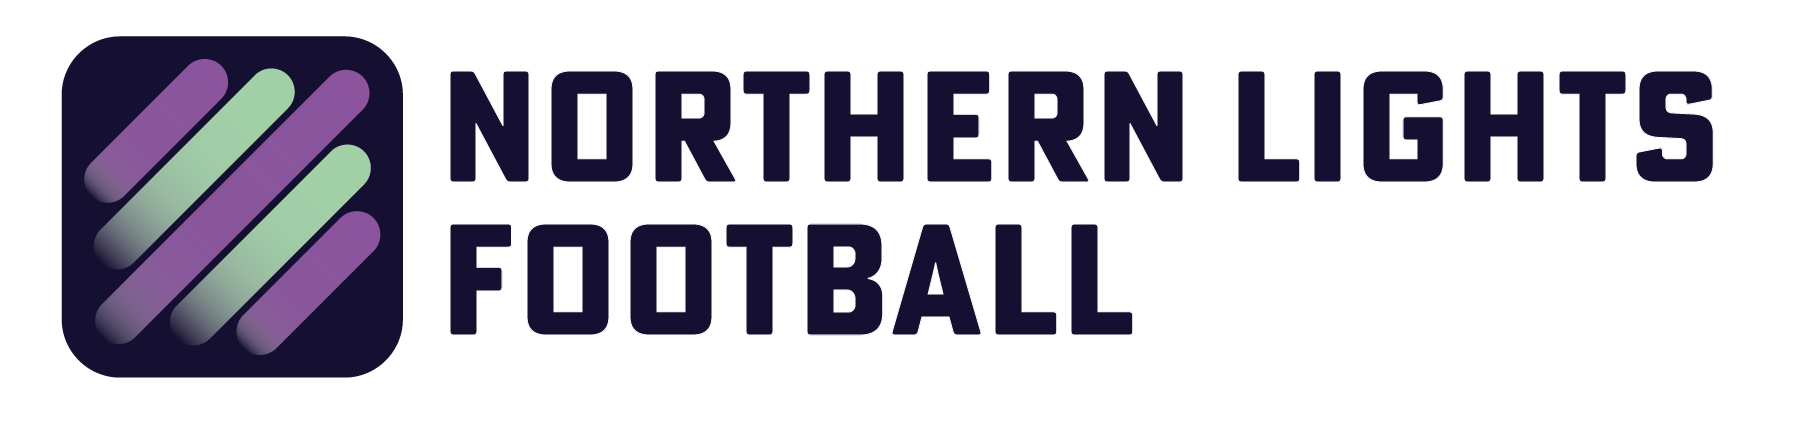 Northern Lights Football Logo